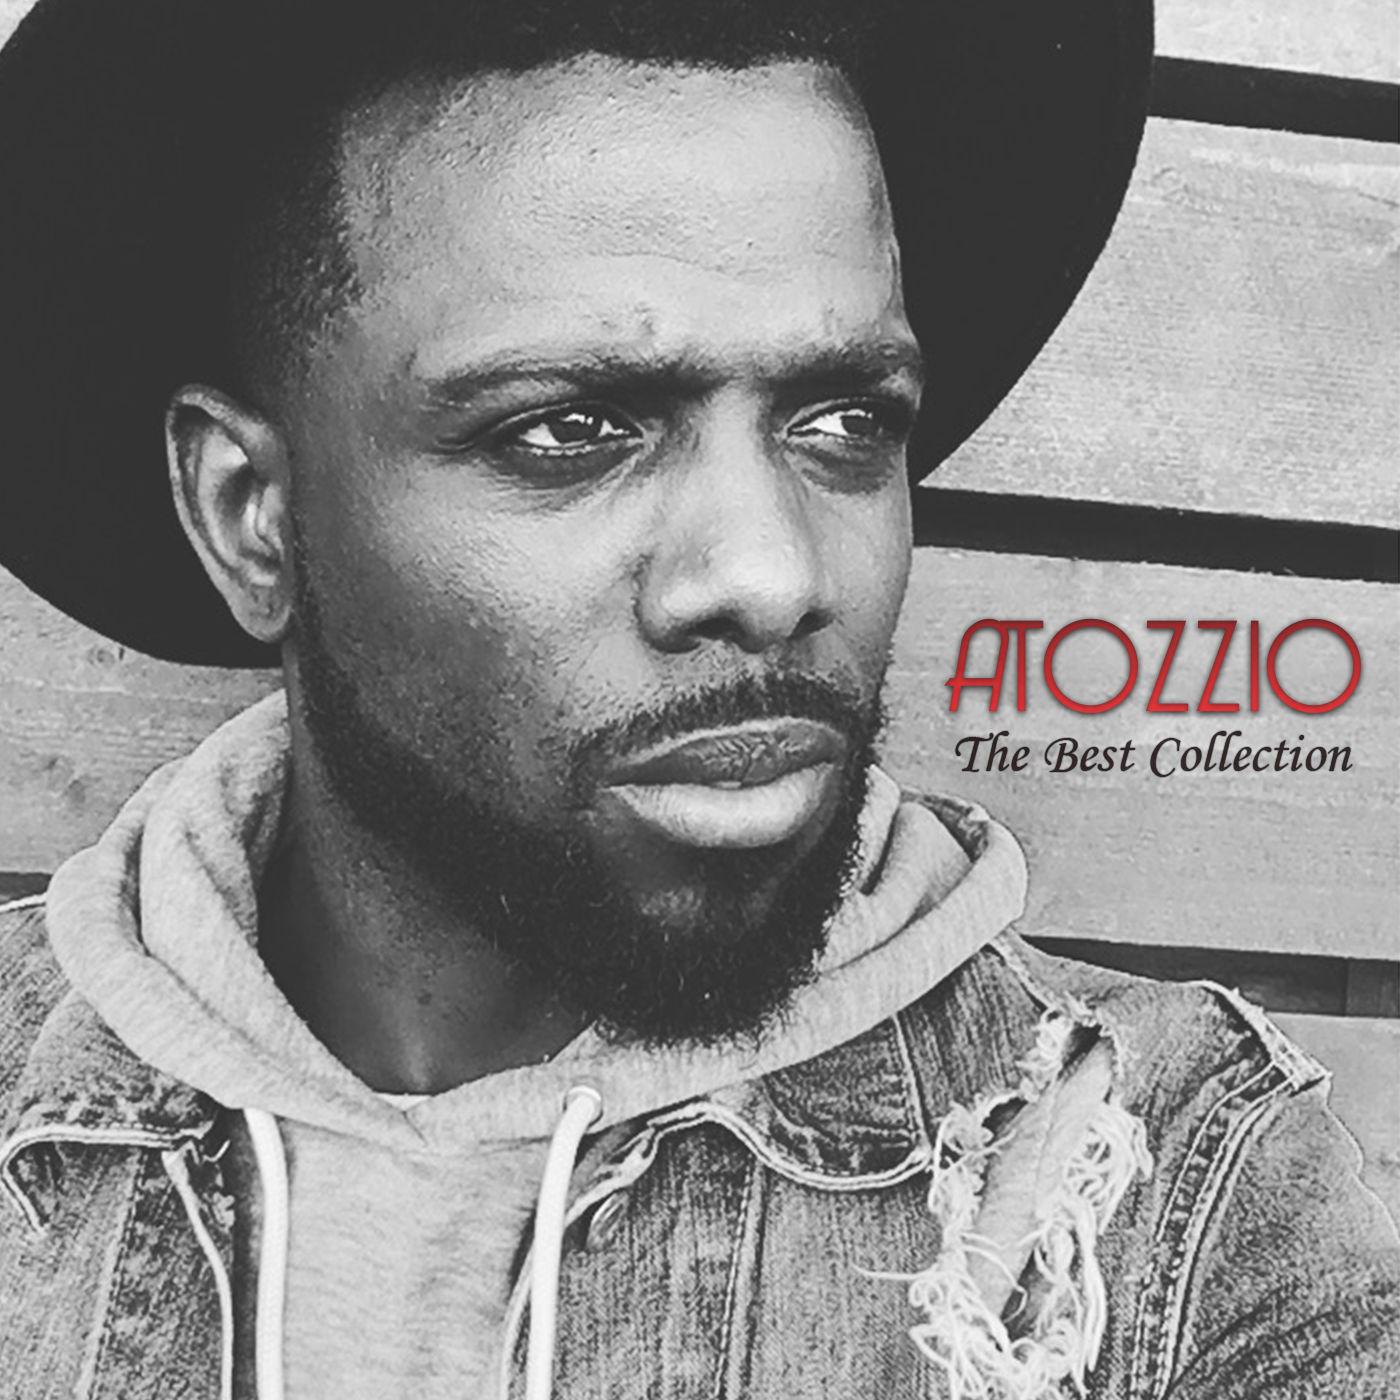 Atozzio - Tender Love